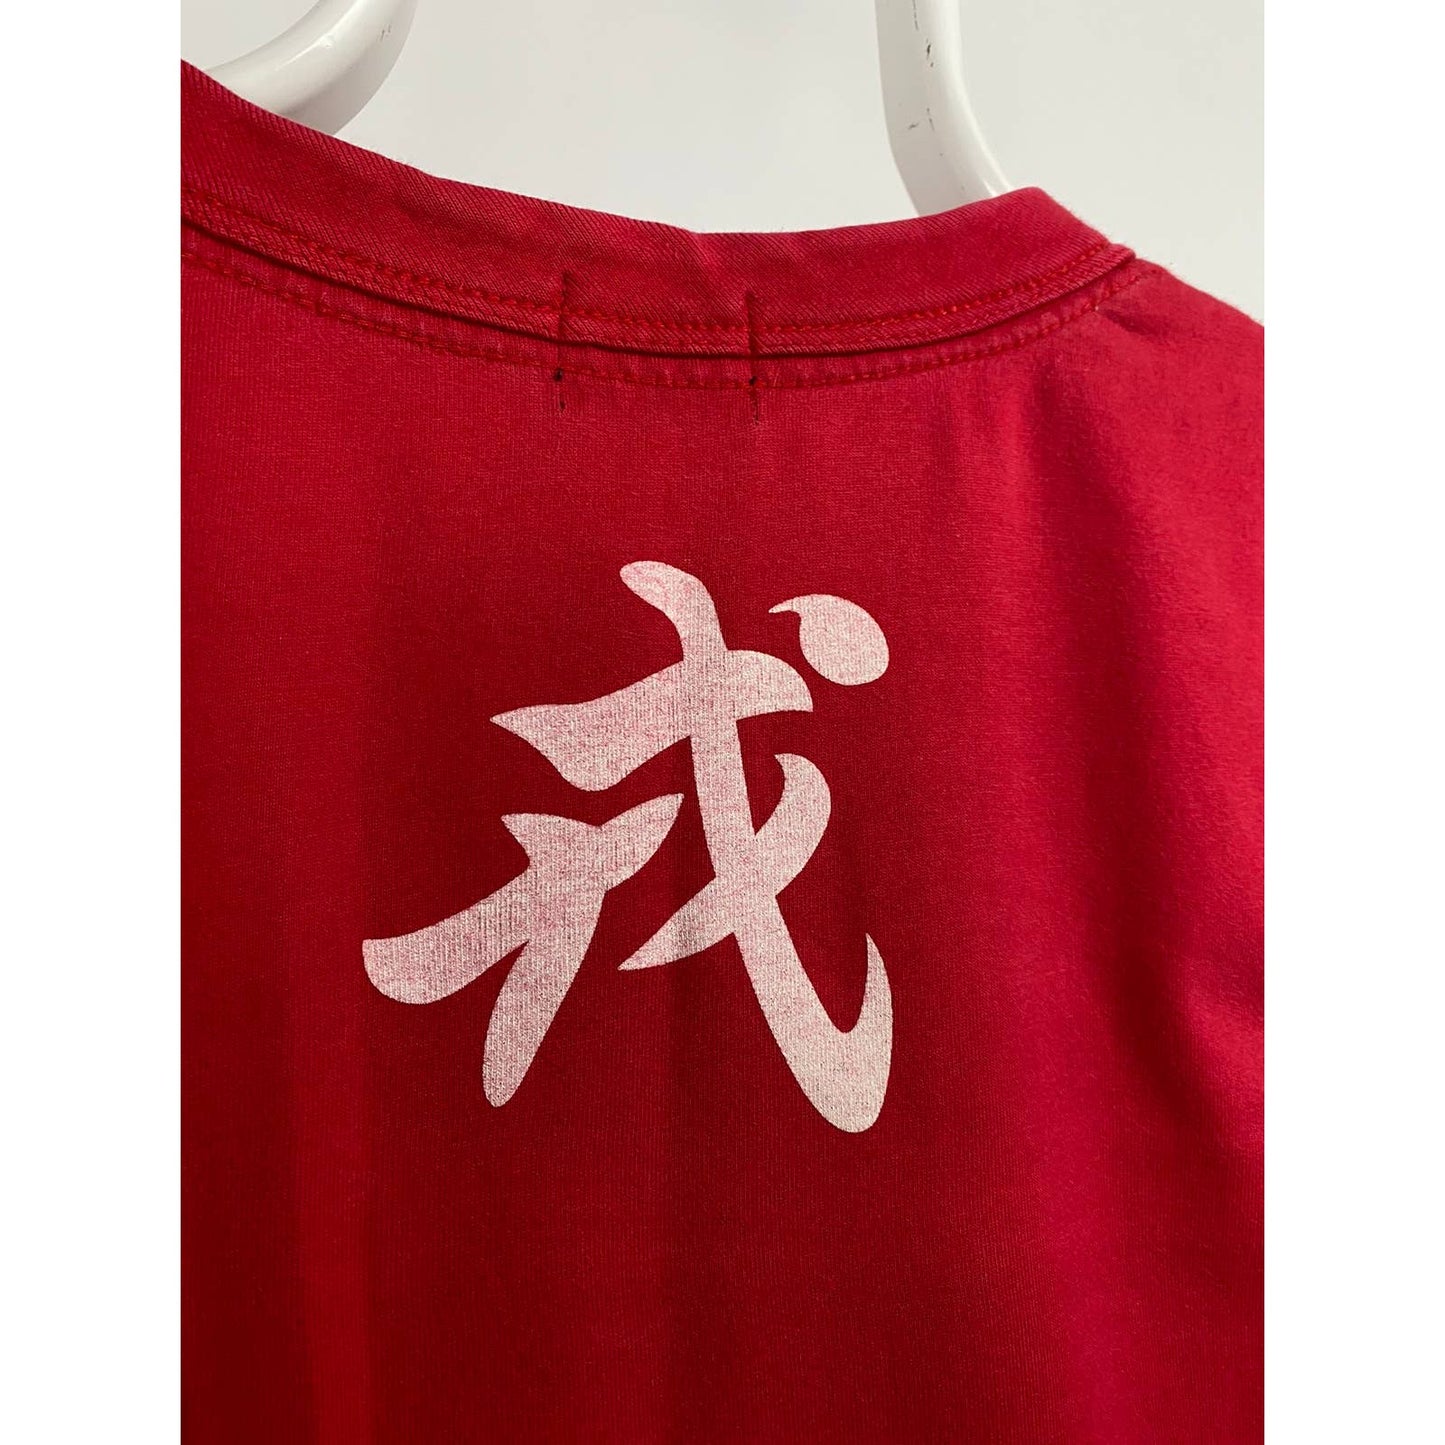 Evisu Japan vintage big logo seagull T-shirt white on red